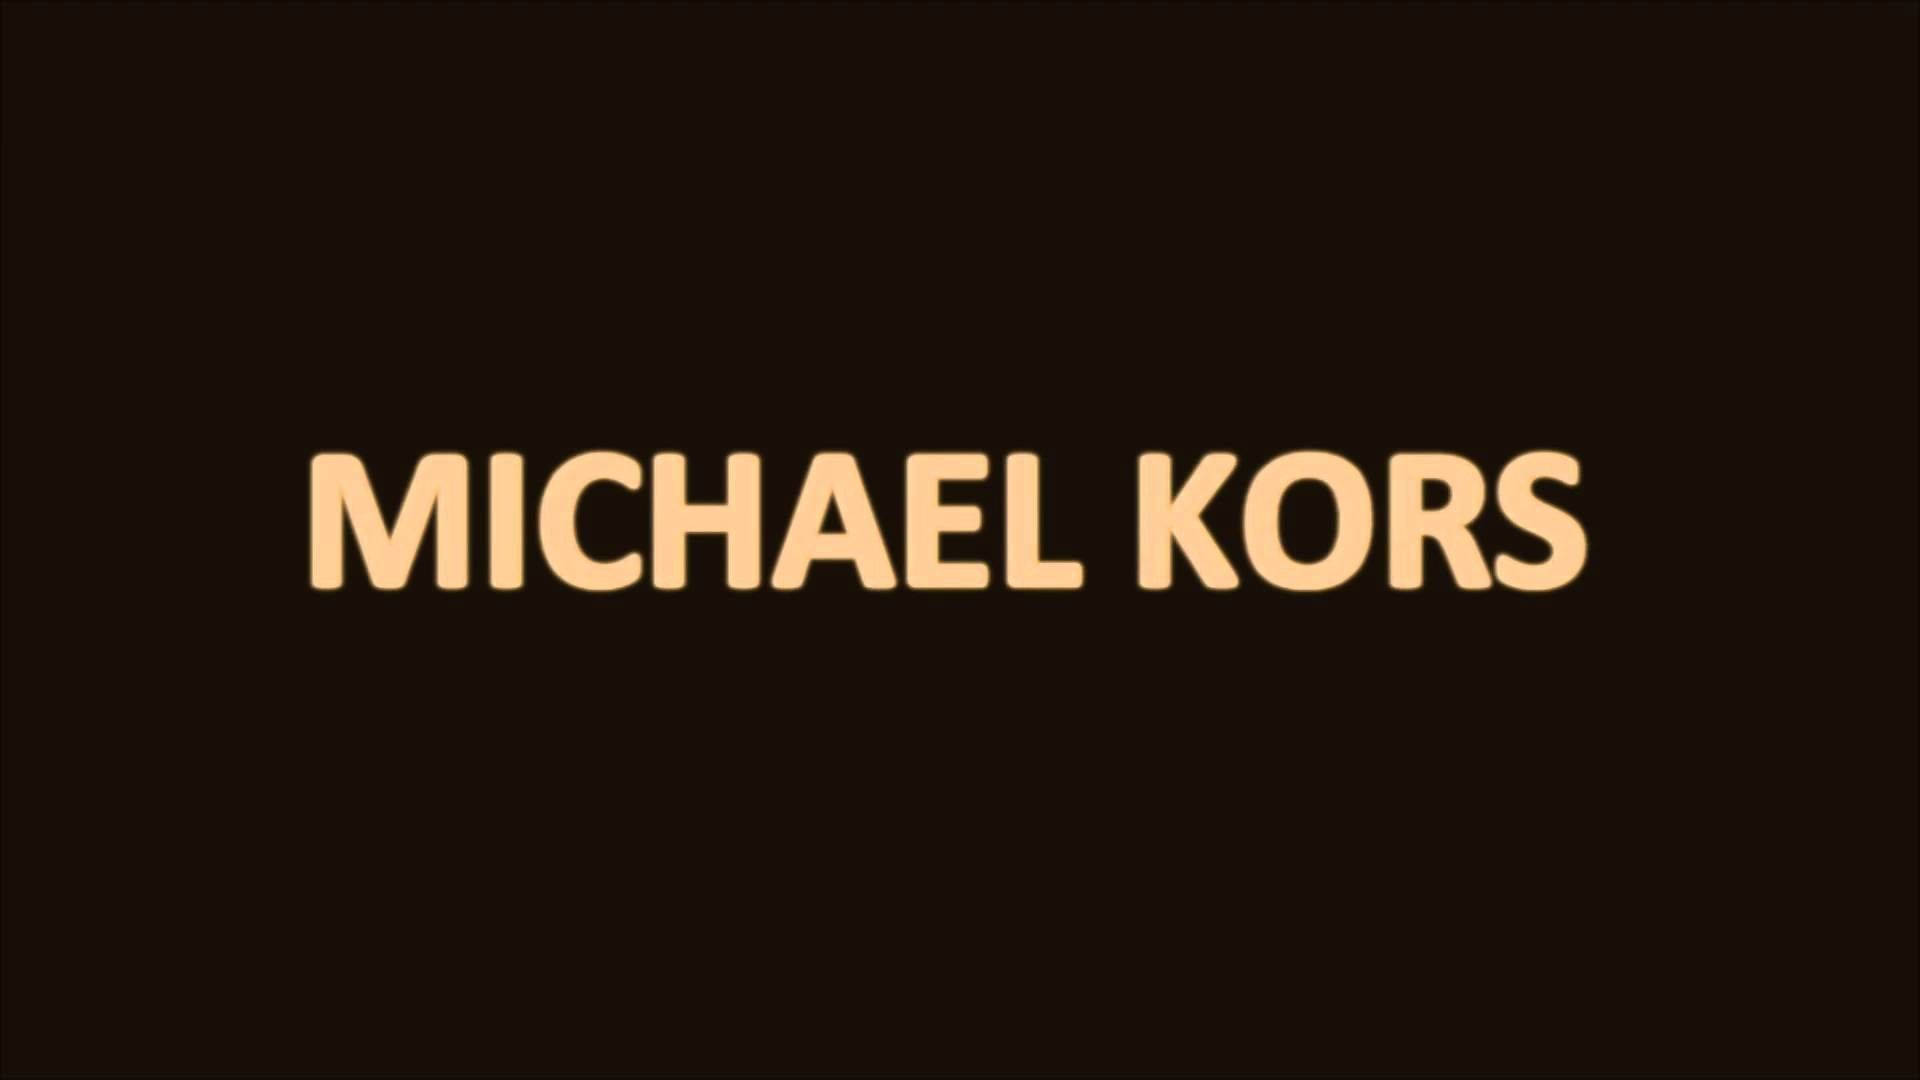 Free Michael Kors Wallpaper Downloads, [100+] Michael Kors Wallpapers for  FREE 